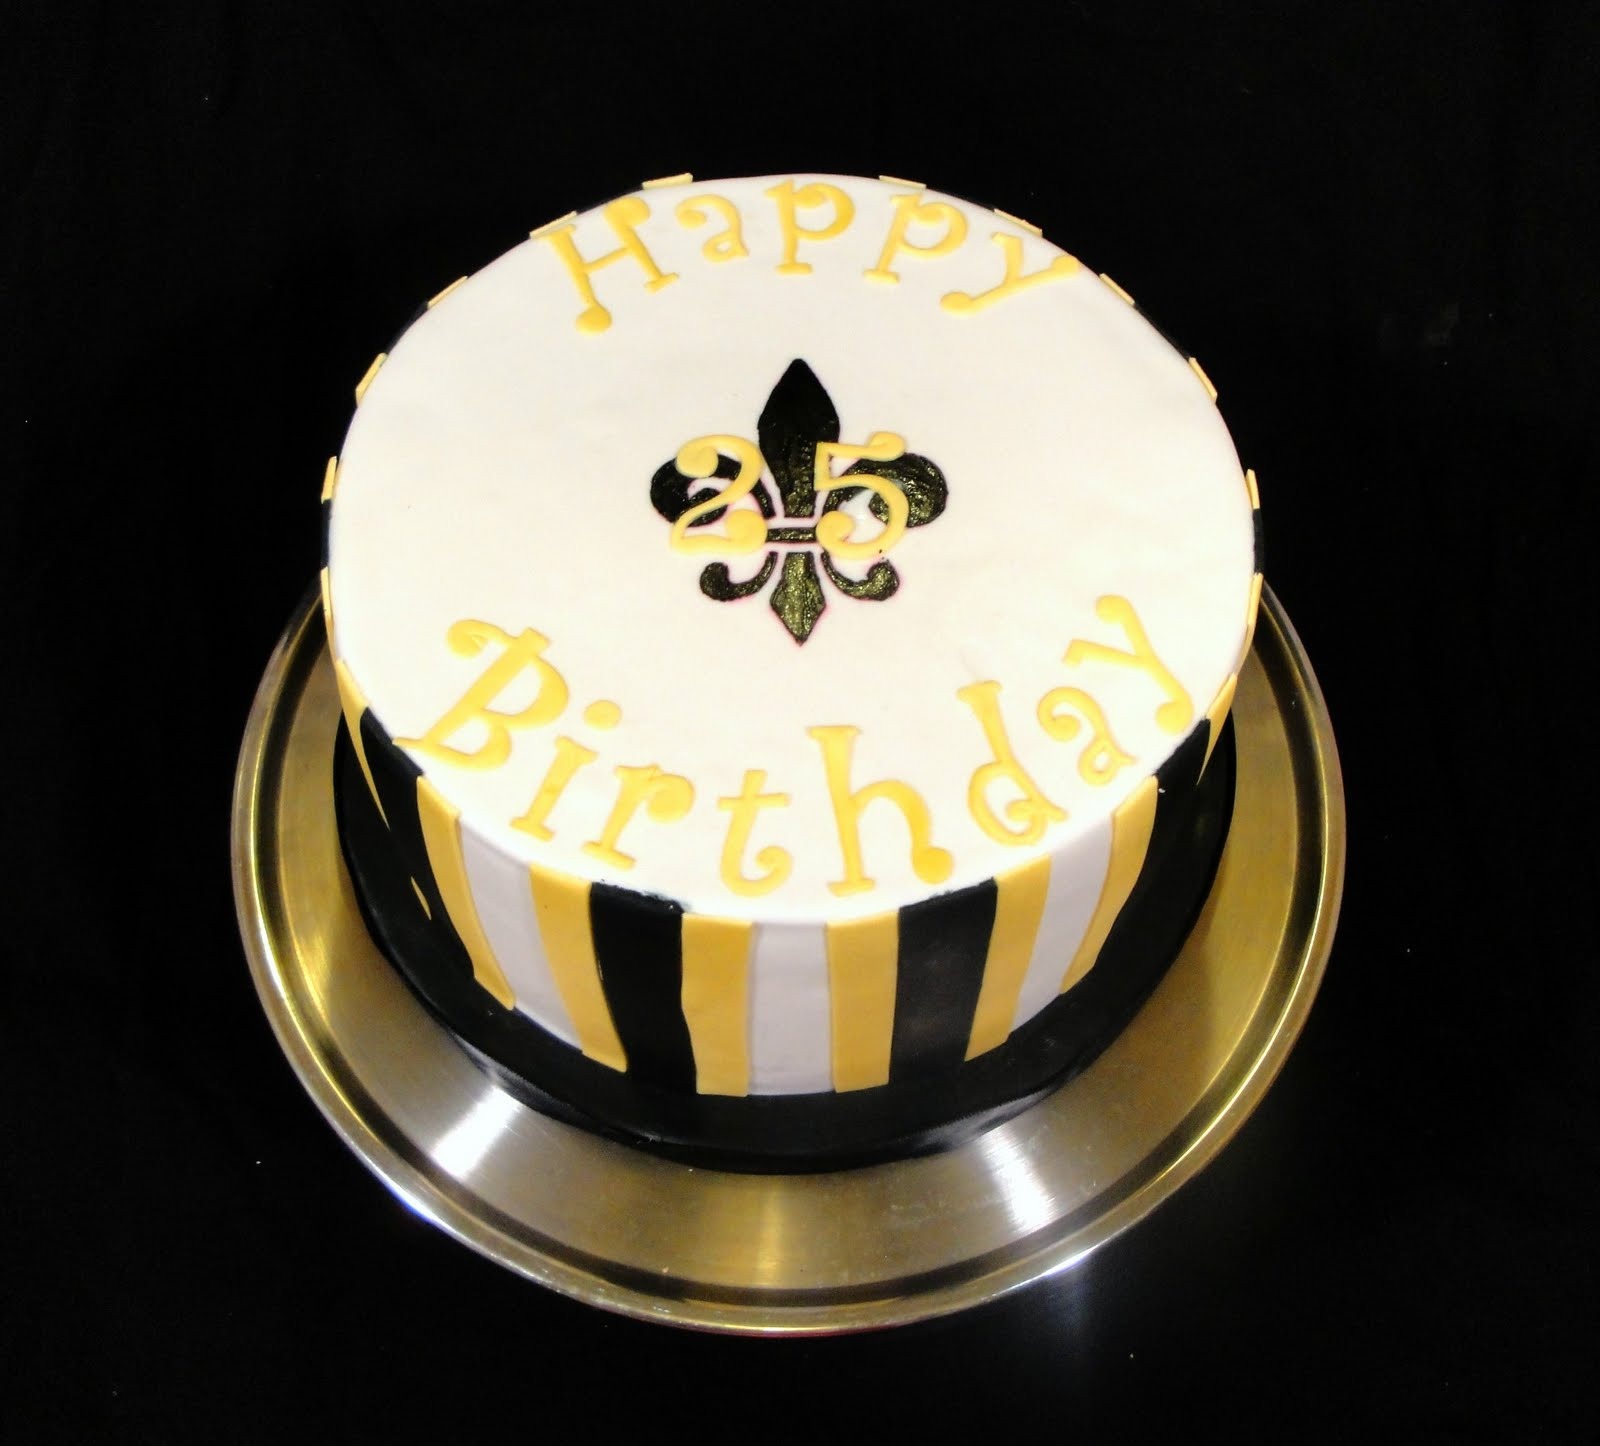 Birthday Cakes New Orleans
 Confections Saints Birthday Cake